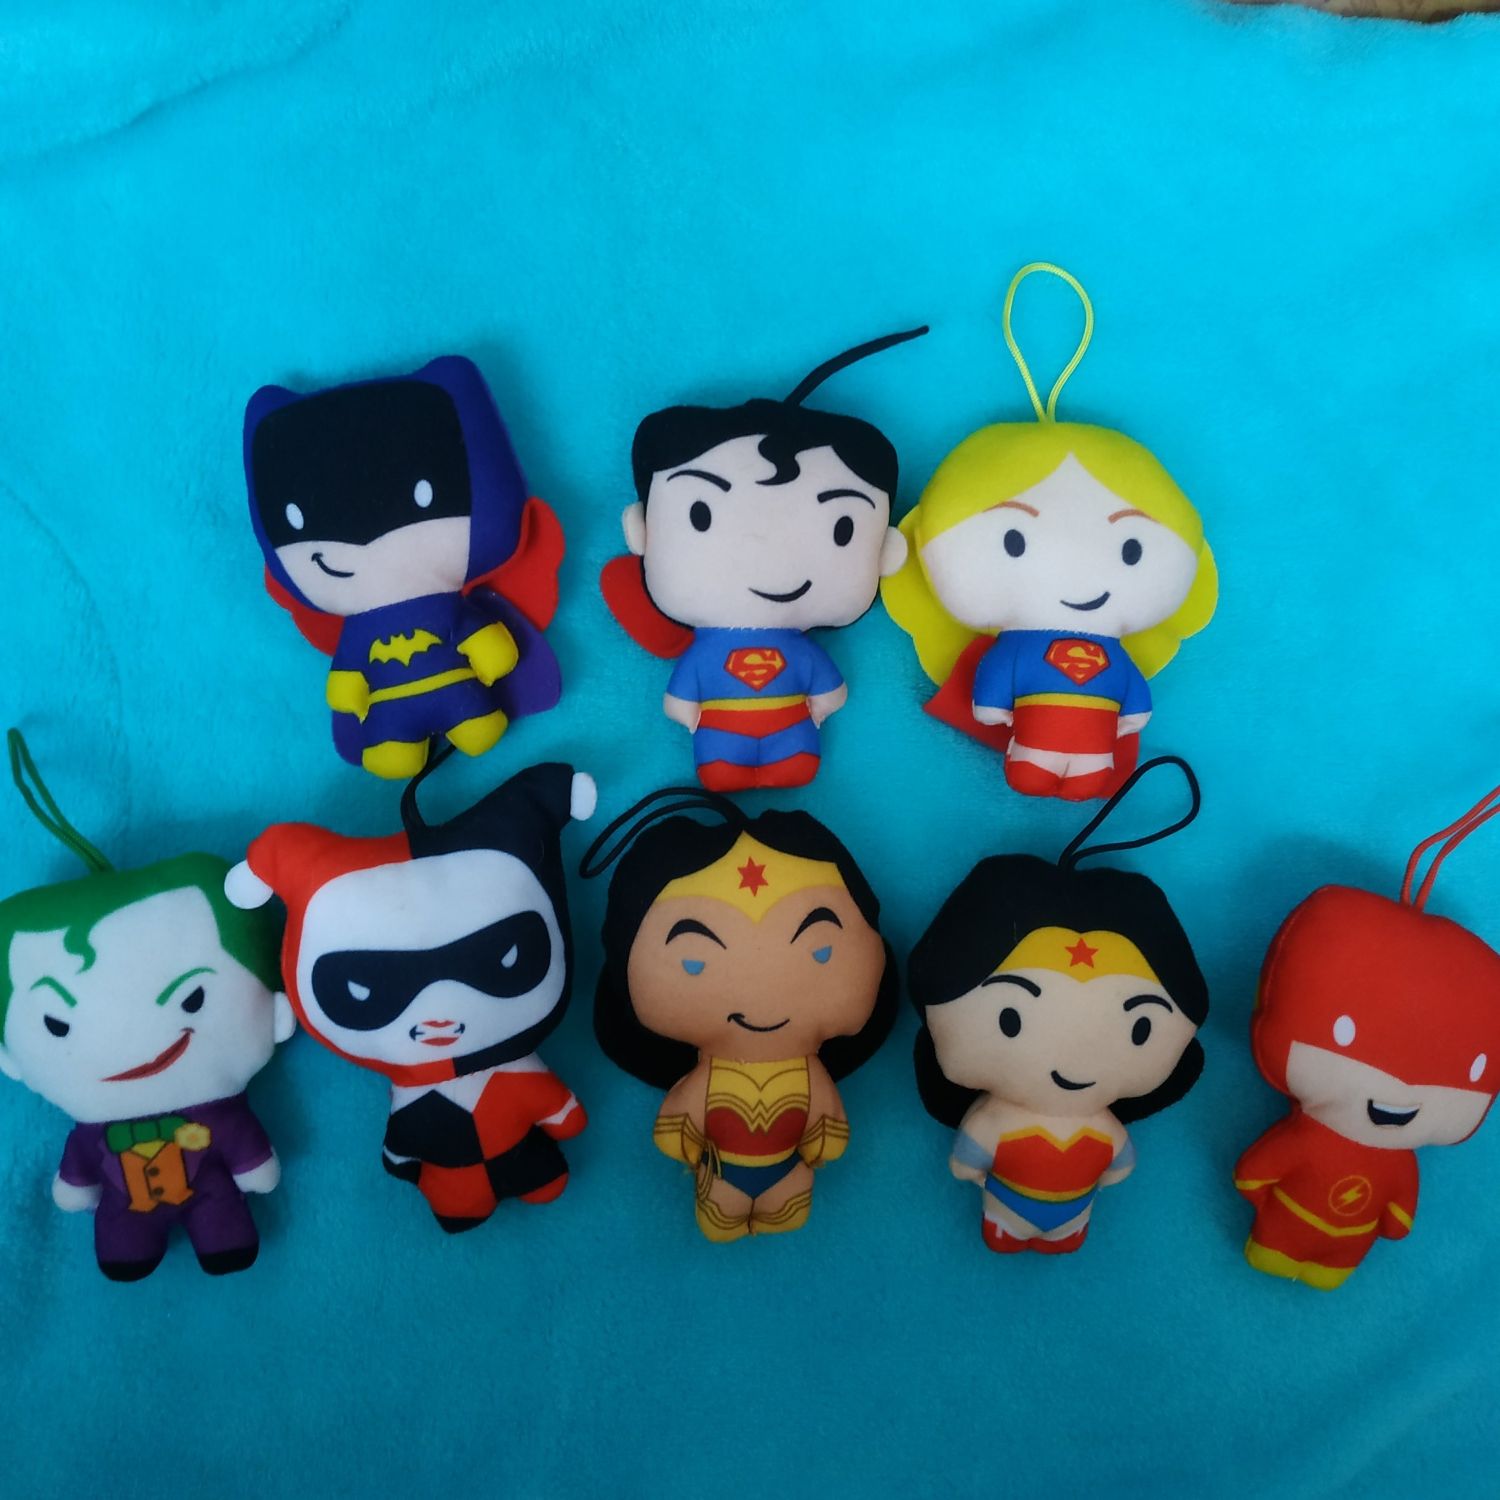 Superpets,DC Лига: суперпитомцы,krypto,Харли квин, Бэтмен,джокер